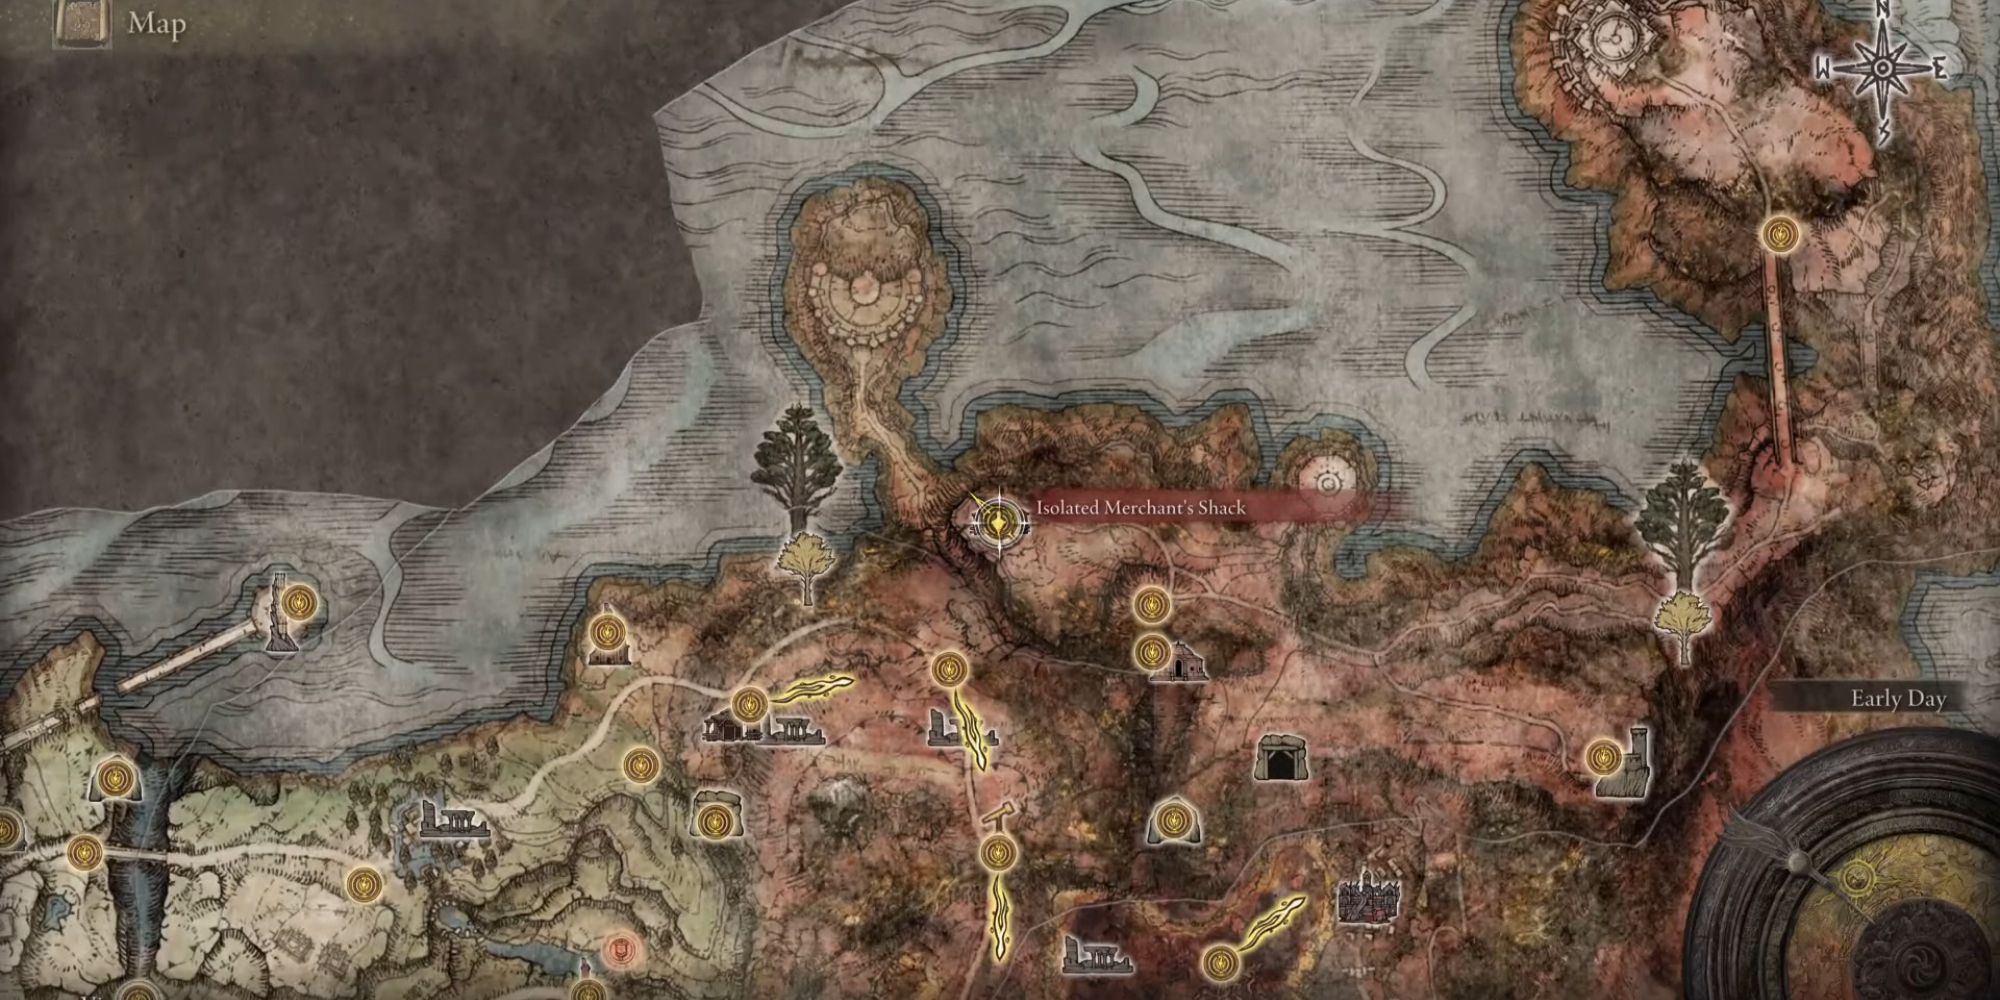 isolated merchants shack on the elden ring map